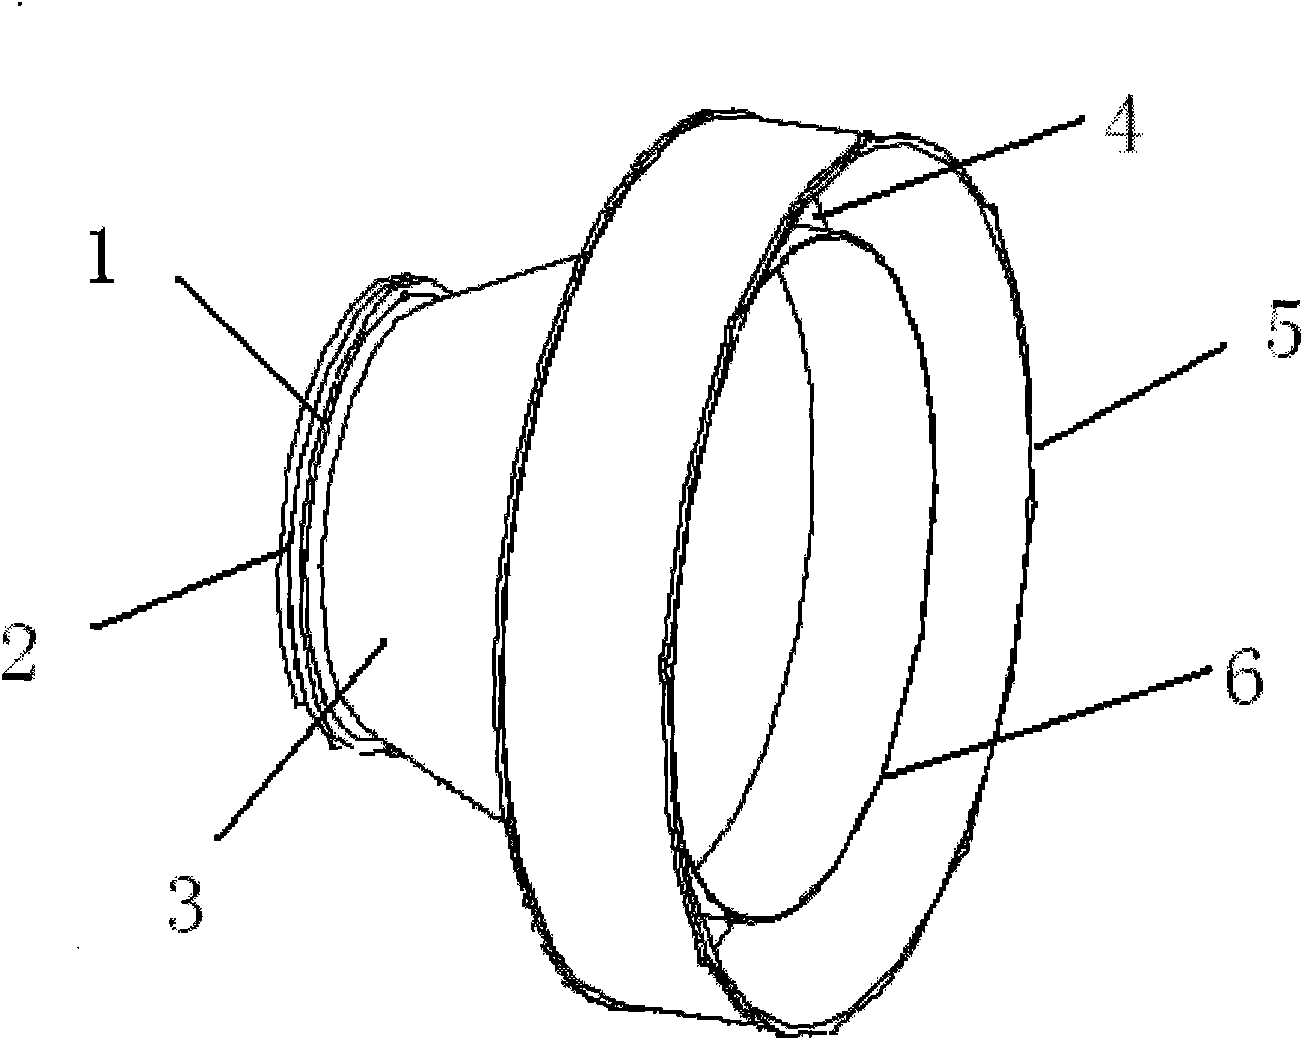 Low-sidelobe horn antennas of micro-strip excitation